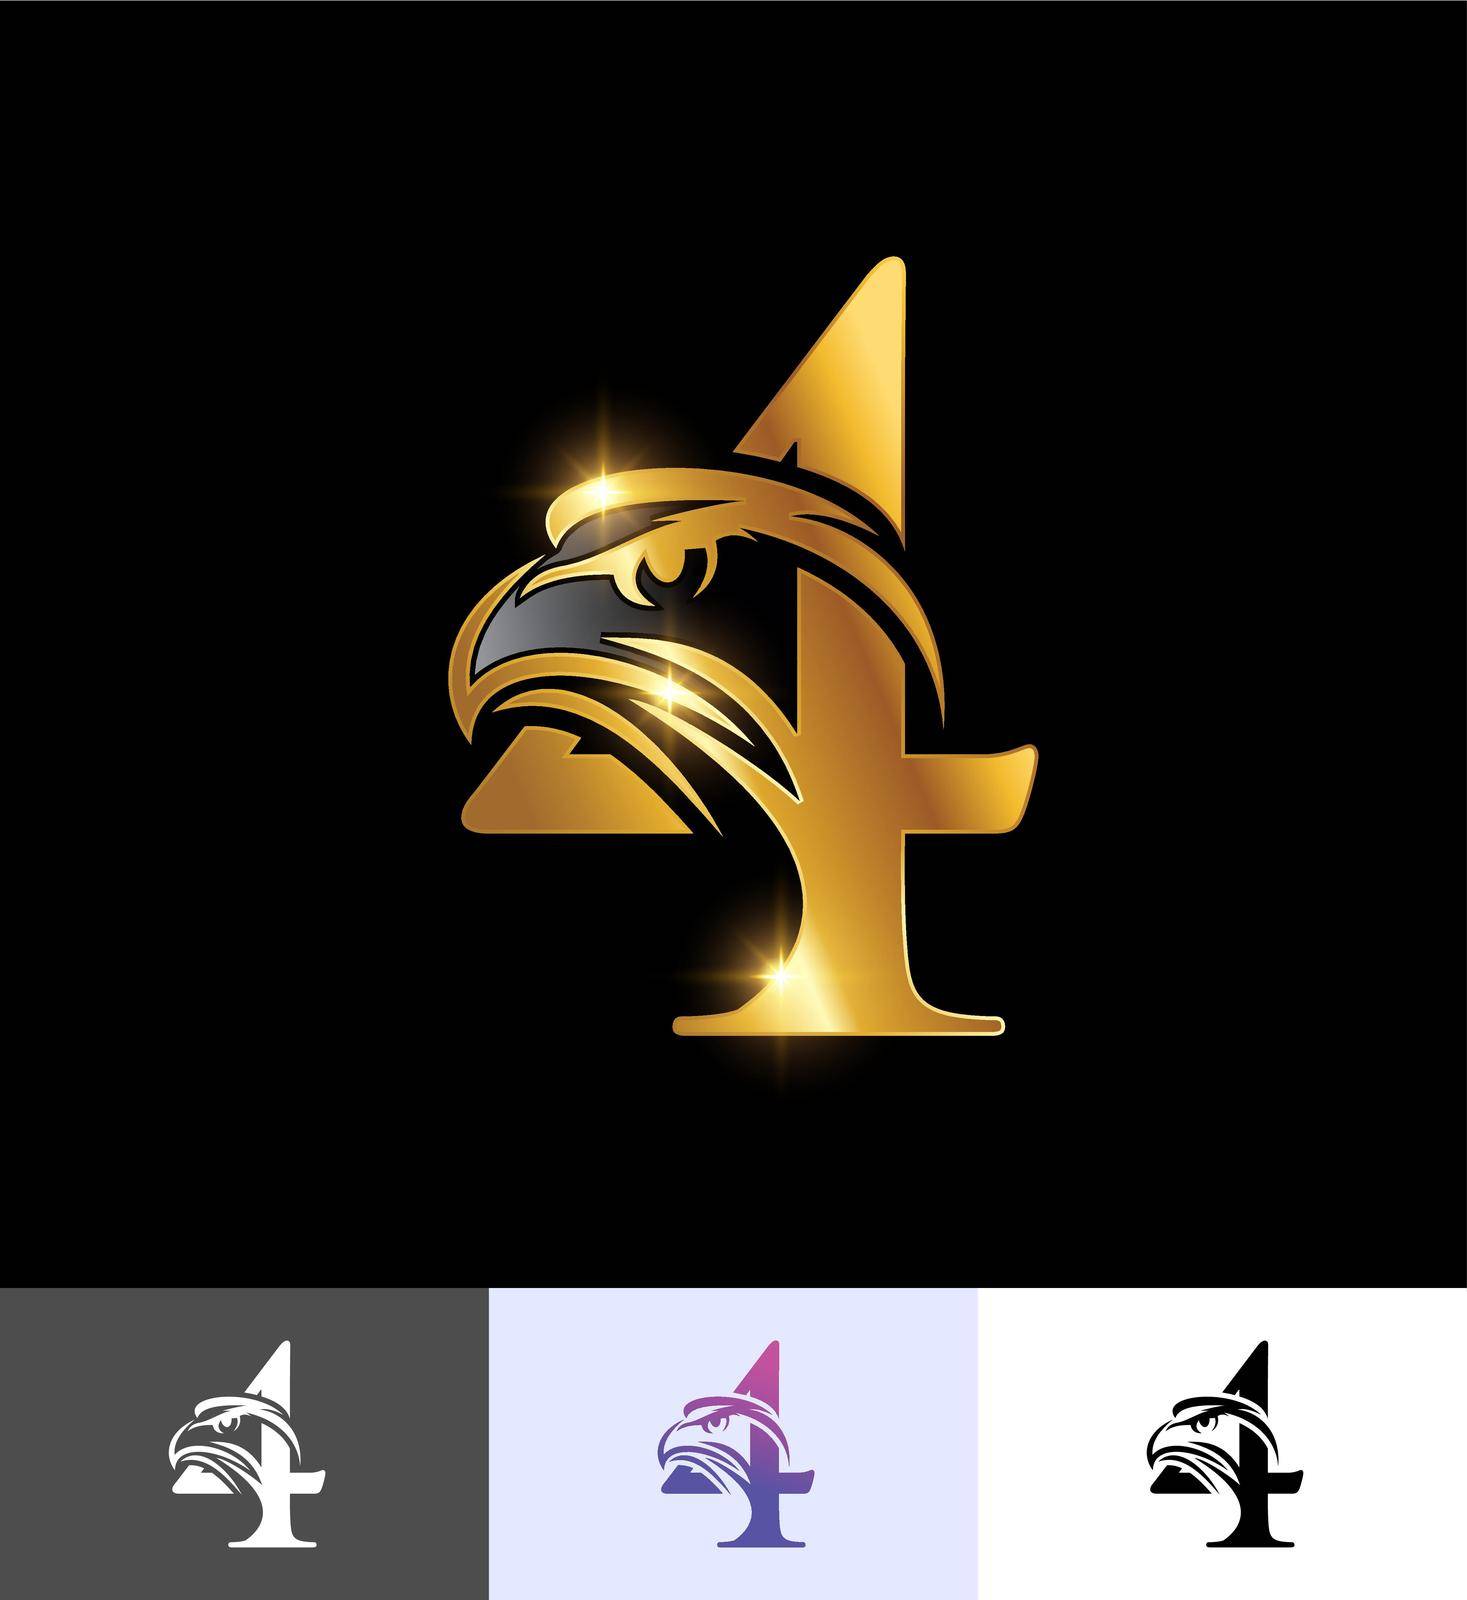 Golden Eagle Monogram Number 4 by Up2date